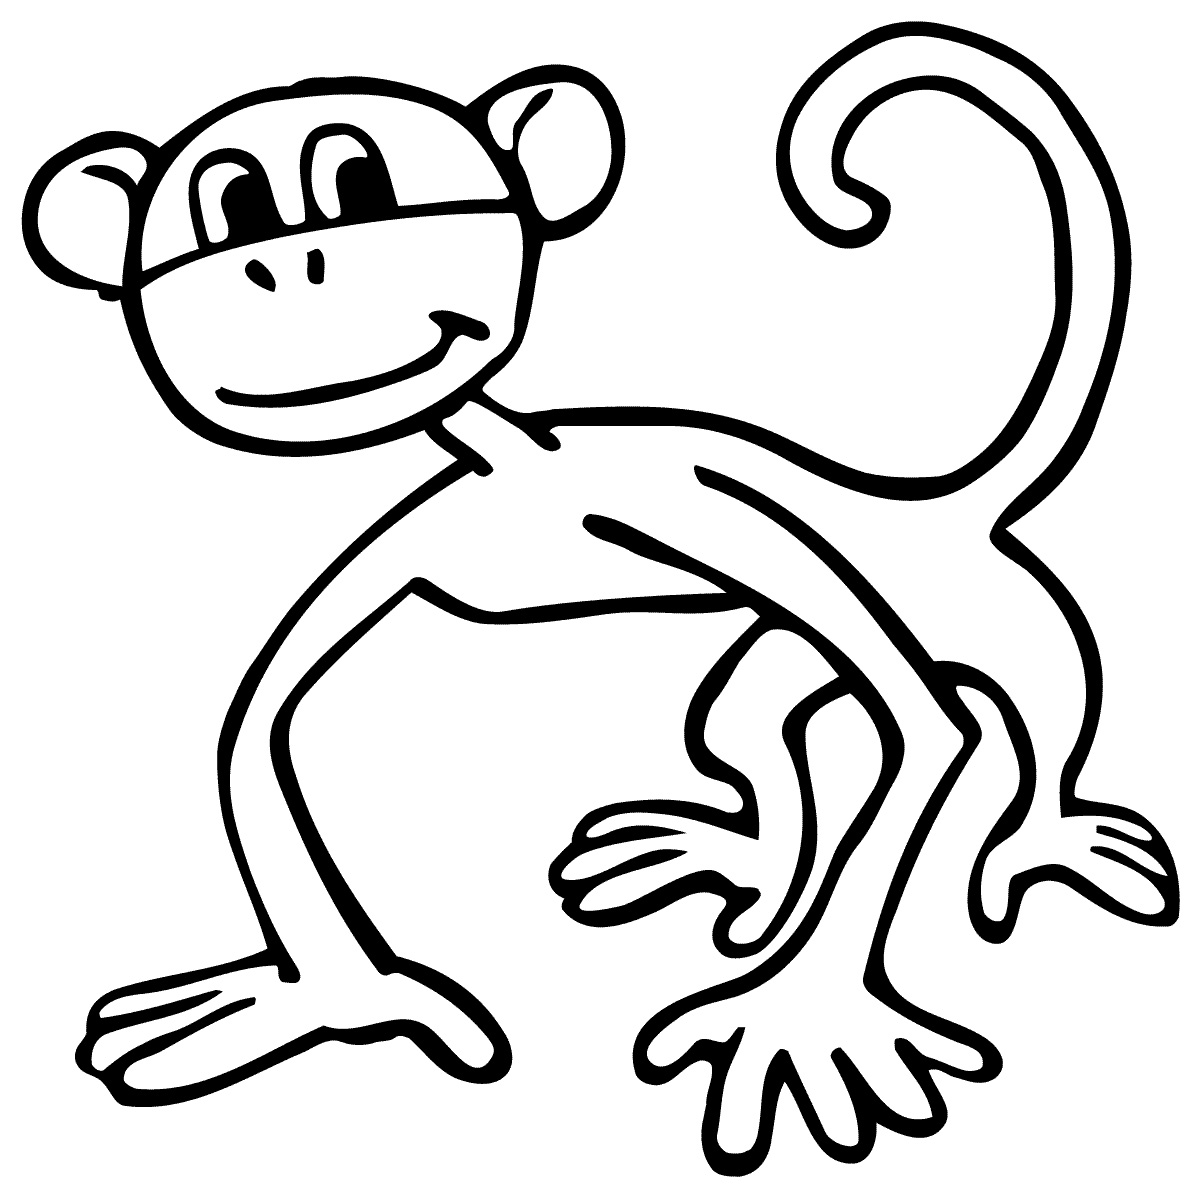 Cartoon spider monkey | www.fifaedu.com coloring pages garden ...